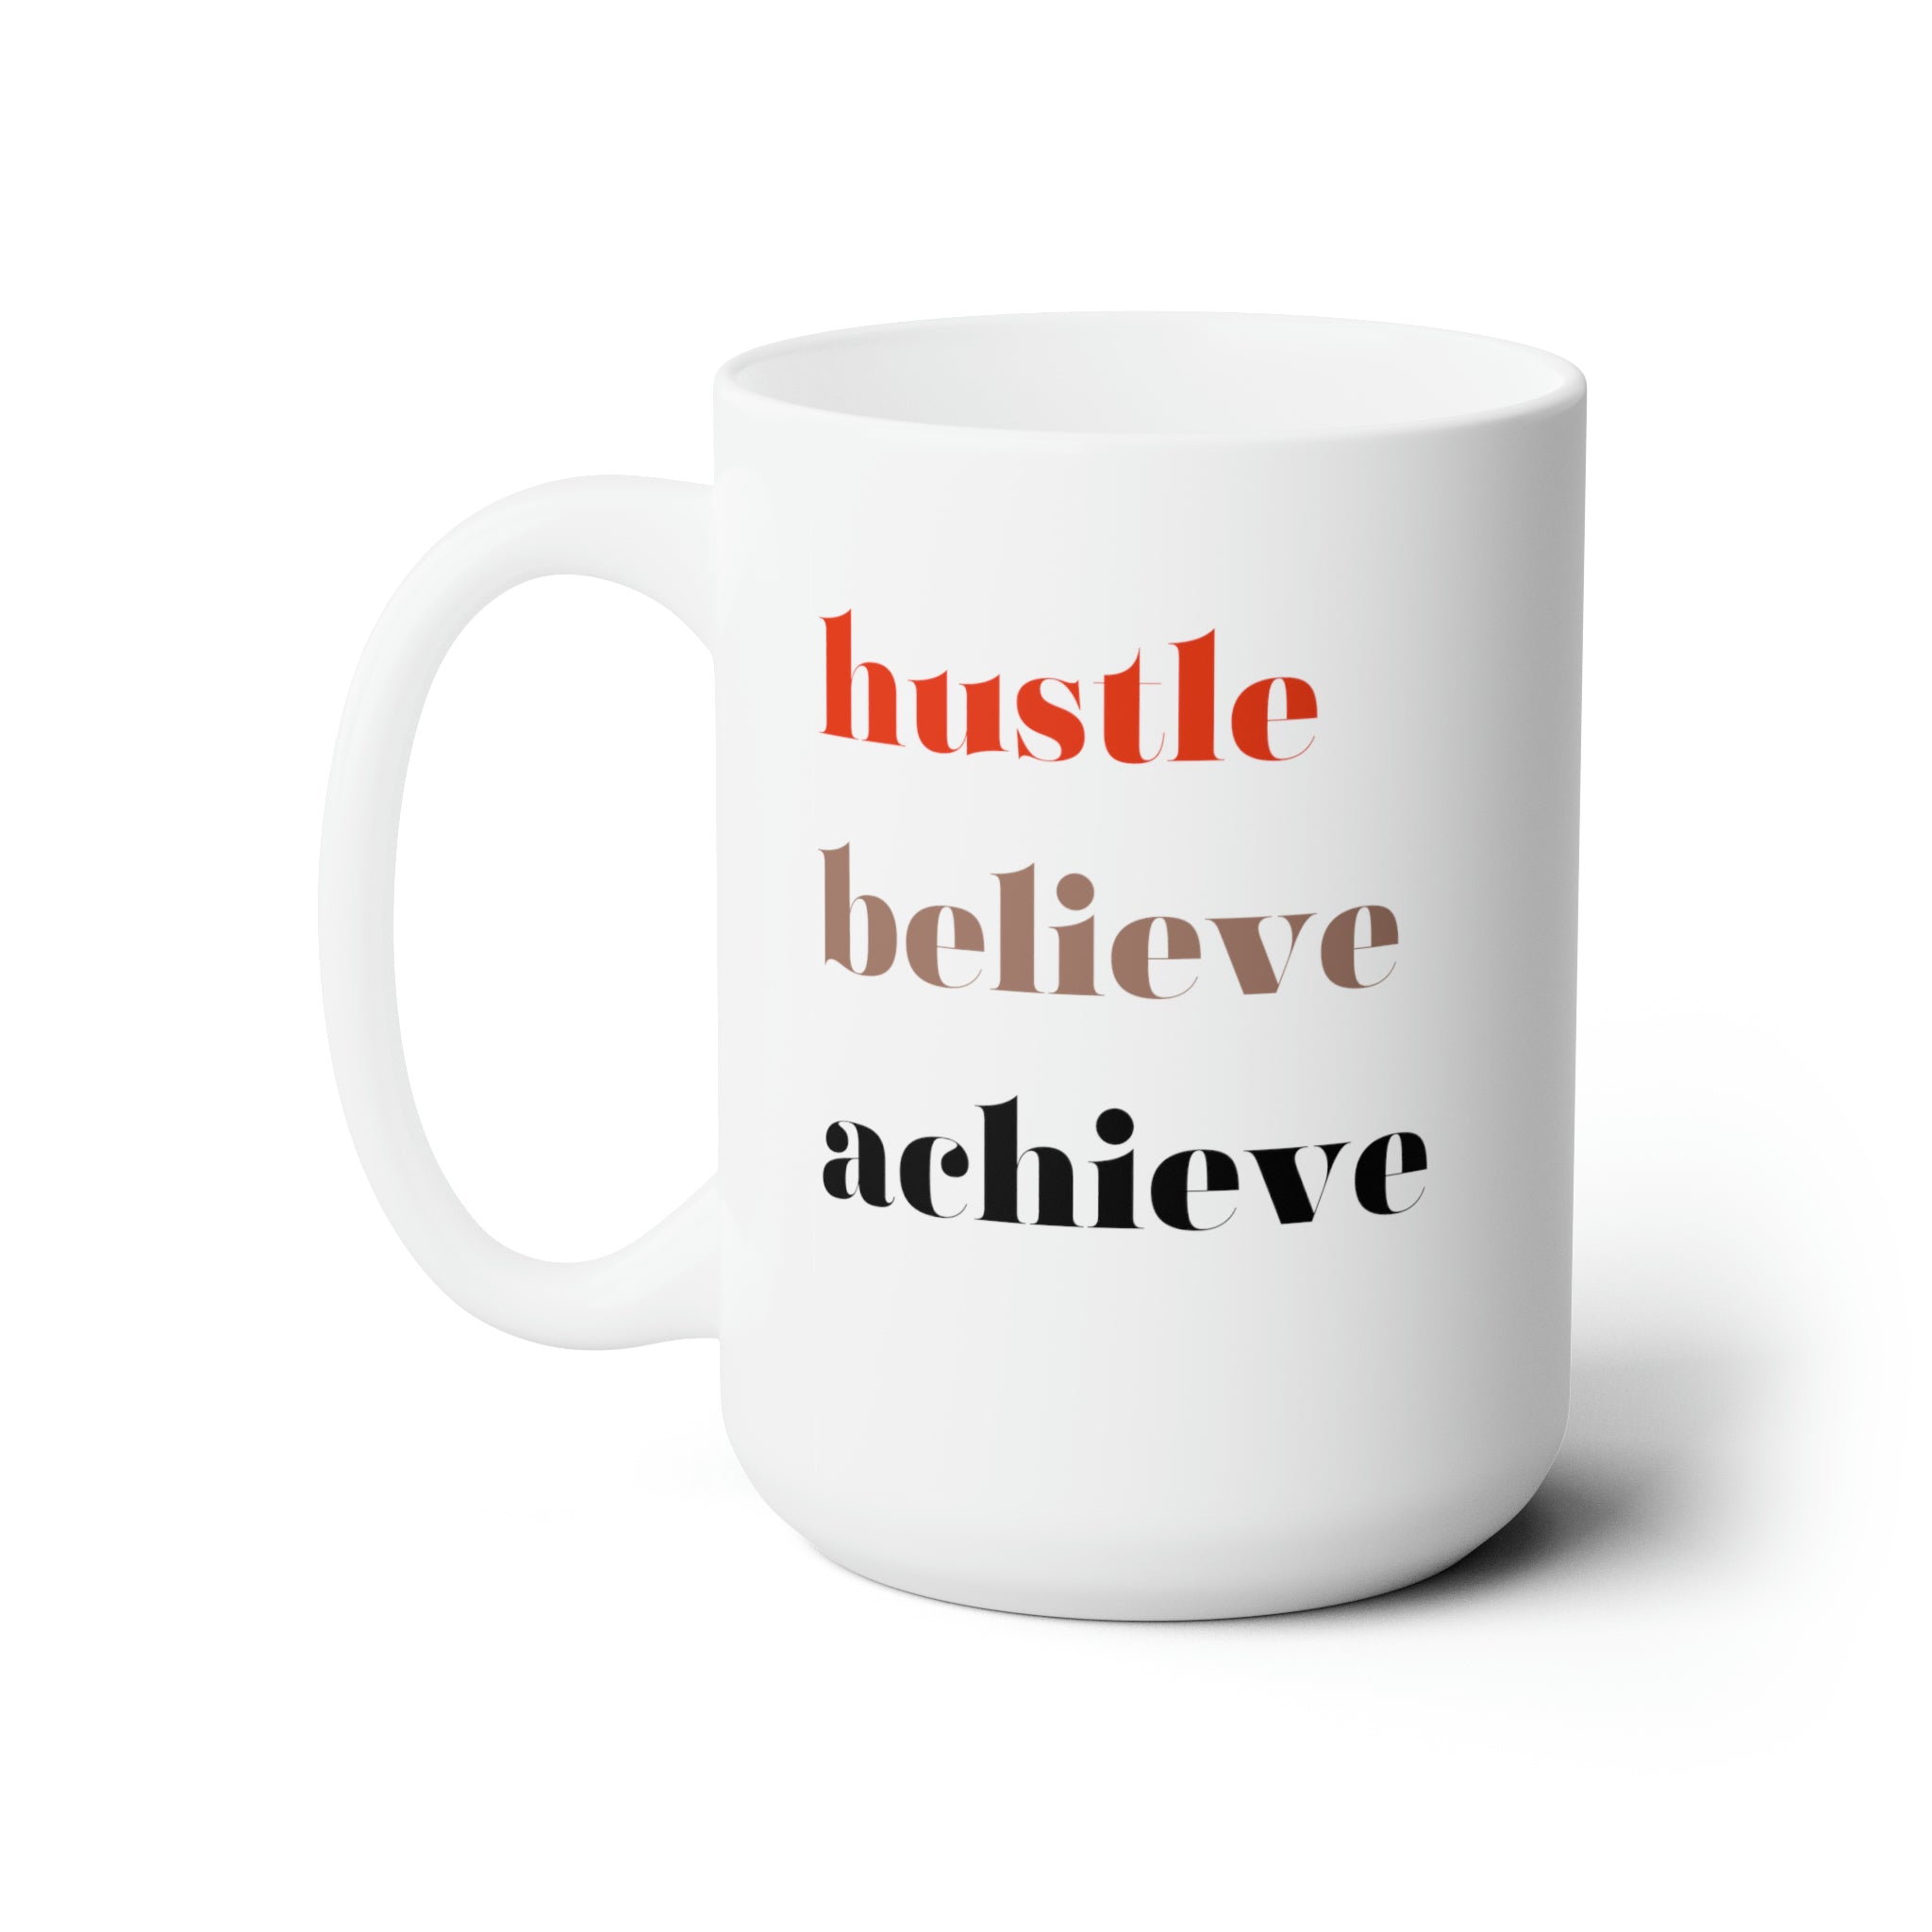 hustle believe achieve aspirational mug from Lindsay Albane